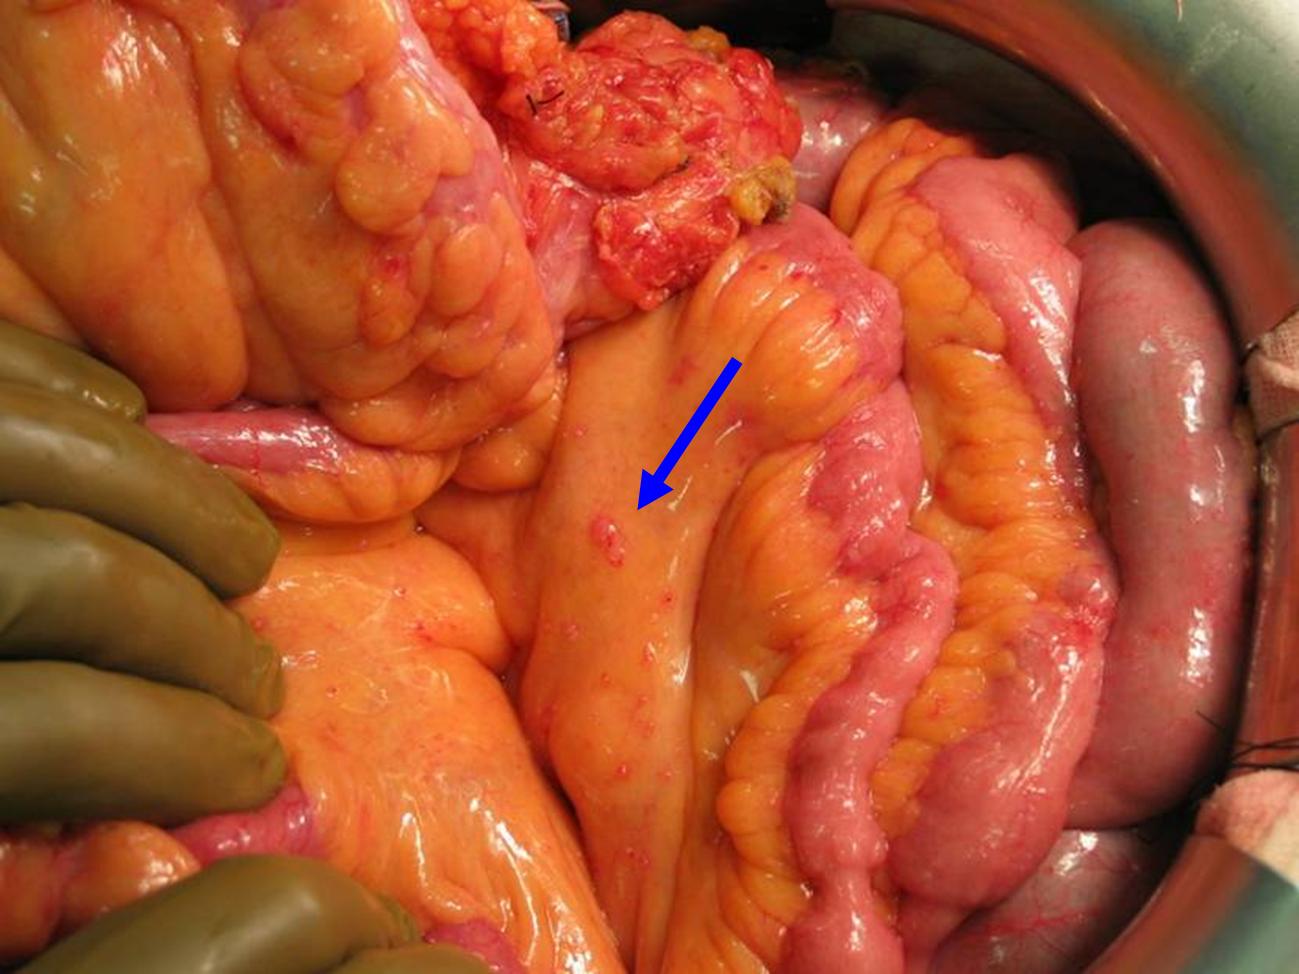 Cancer in peritoneal cavity